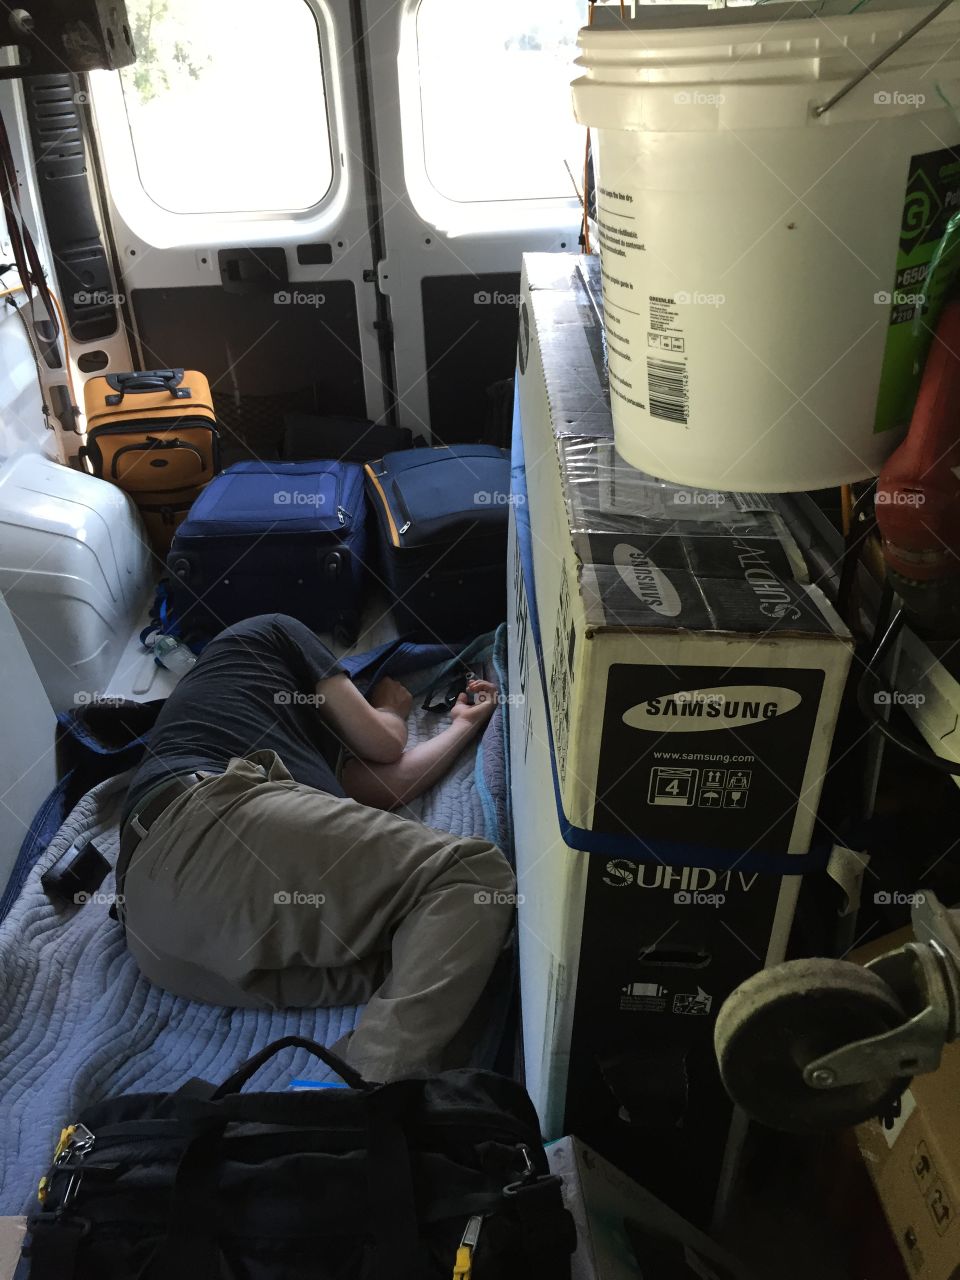 Sleeping in the work truck